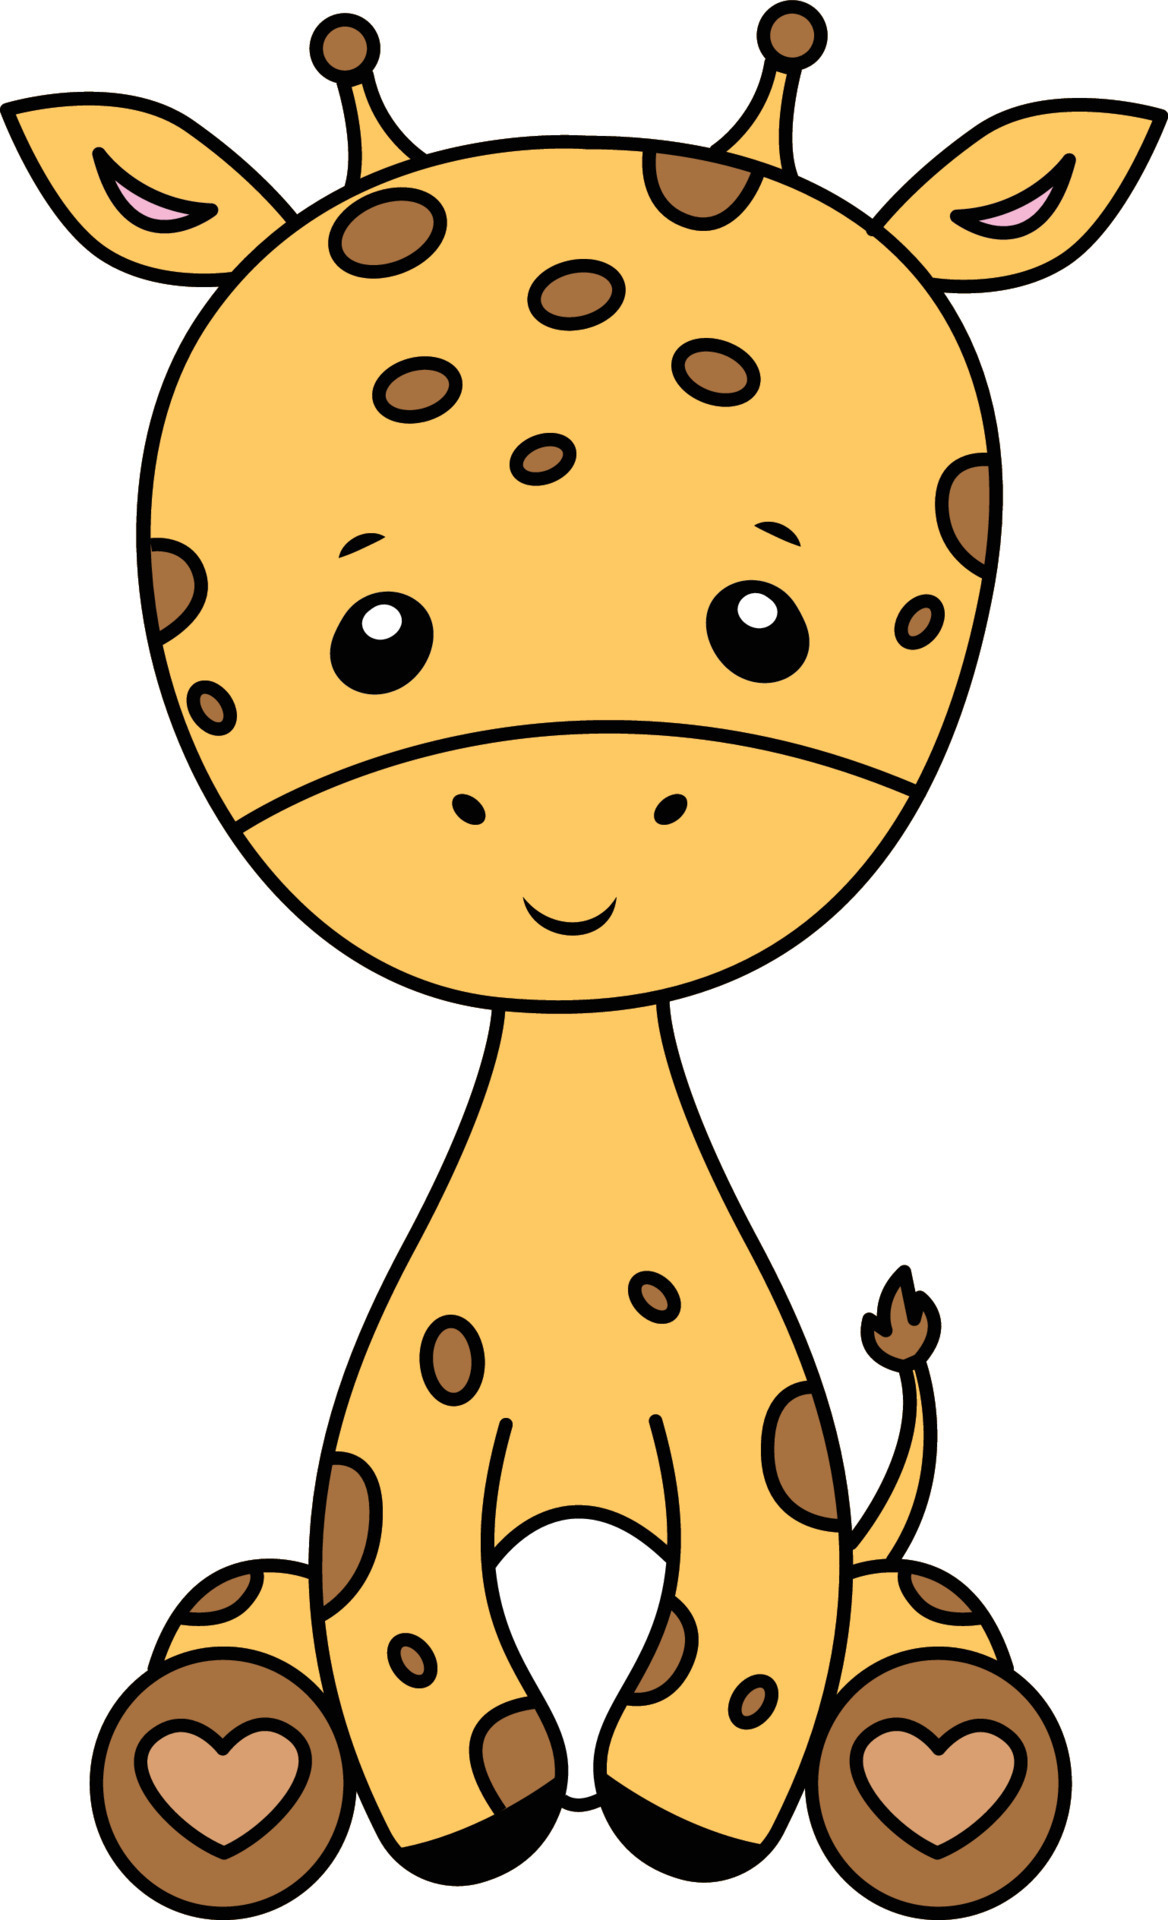 Baby Giraffe Cartoon Drawing, Baby Giraffe Cute Illustration ...